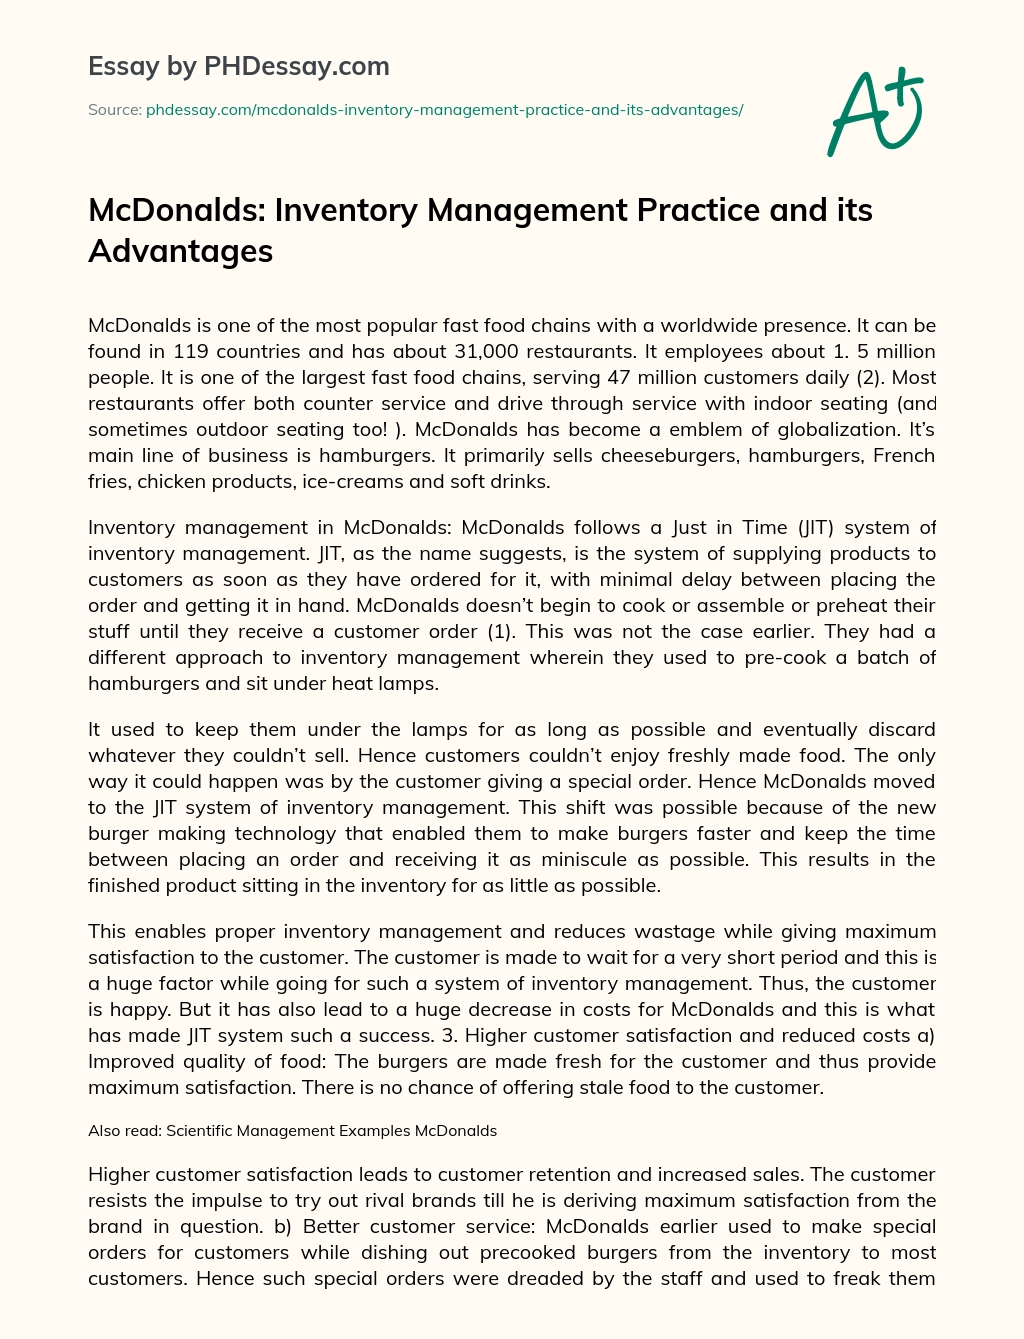 McDonalds: Inventory Management Practice and its Advantages essay